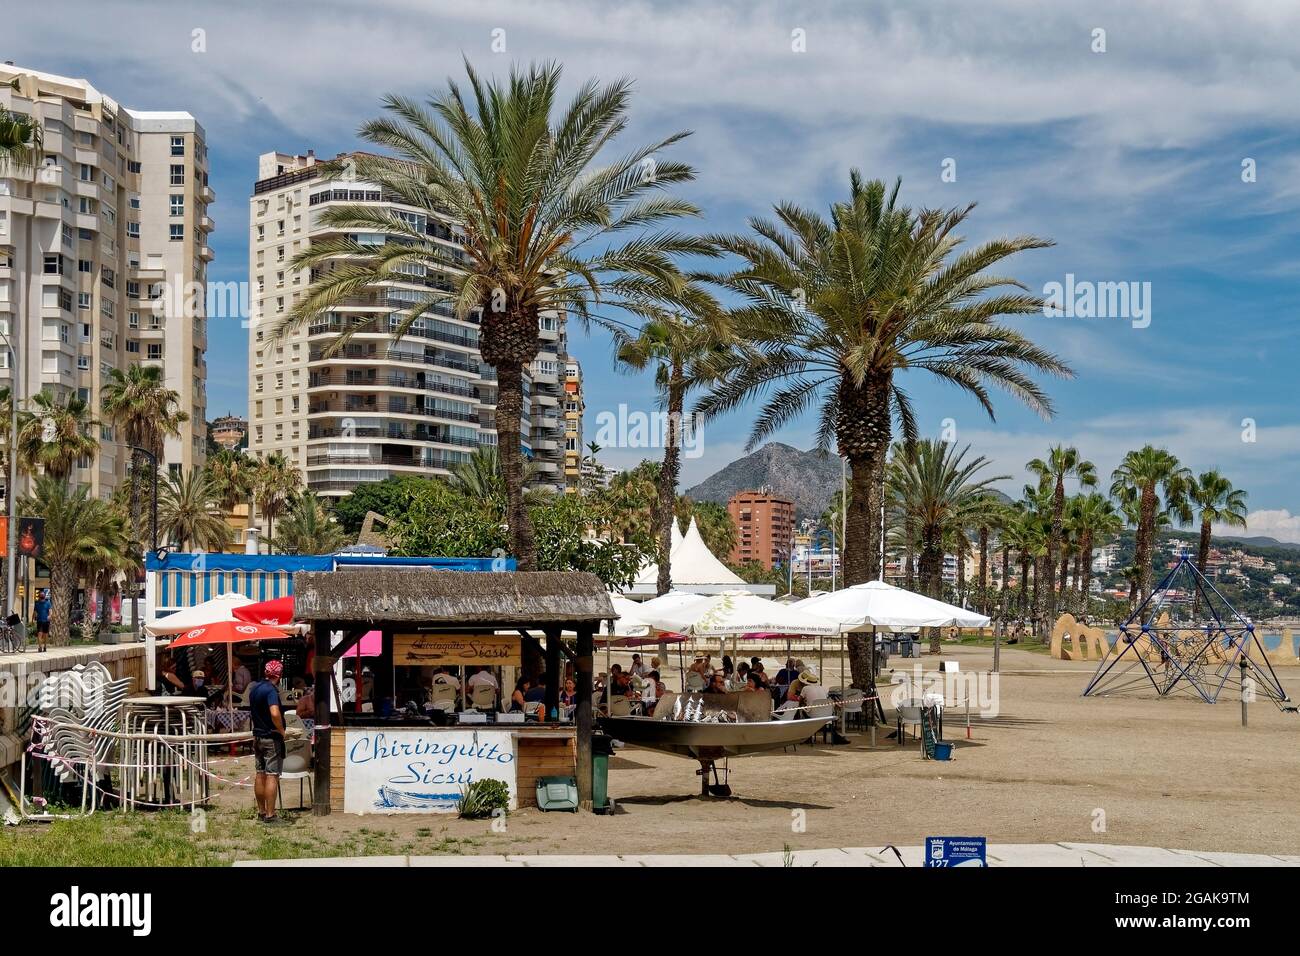 Sandstrand Malaga, Playa de la Malagueta, Chiringuito Sicsu, Beach Bar,  Palmen, Costa del Sol, Provinz Malaga, Andalusien, Spanien, Europa, Stock Photo